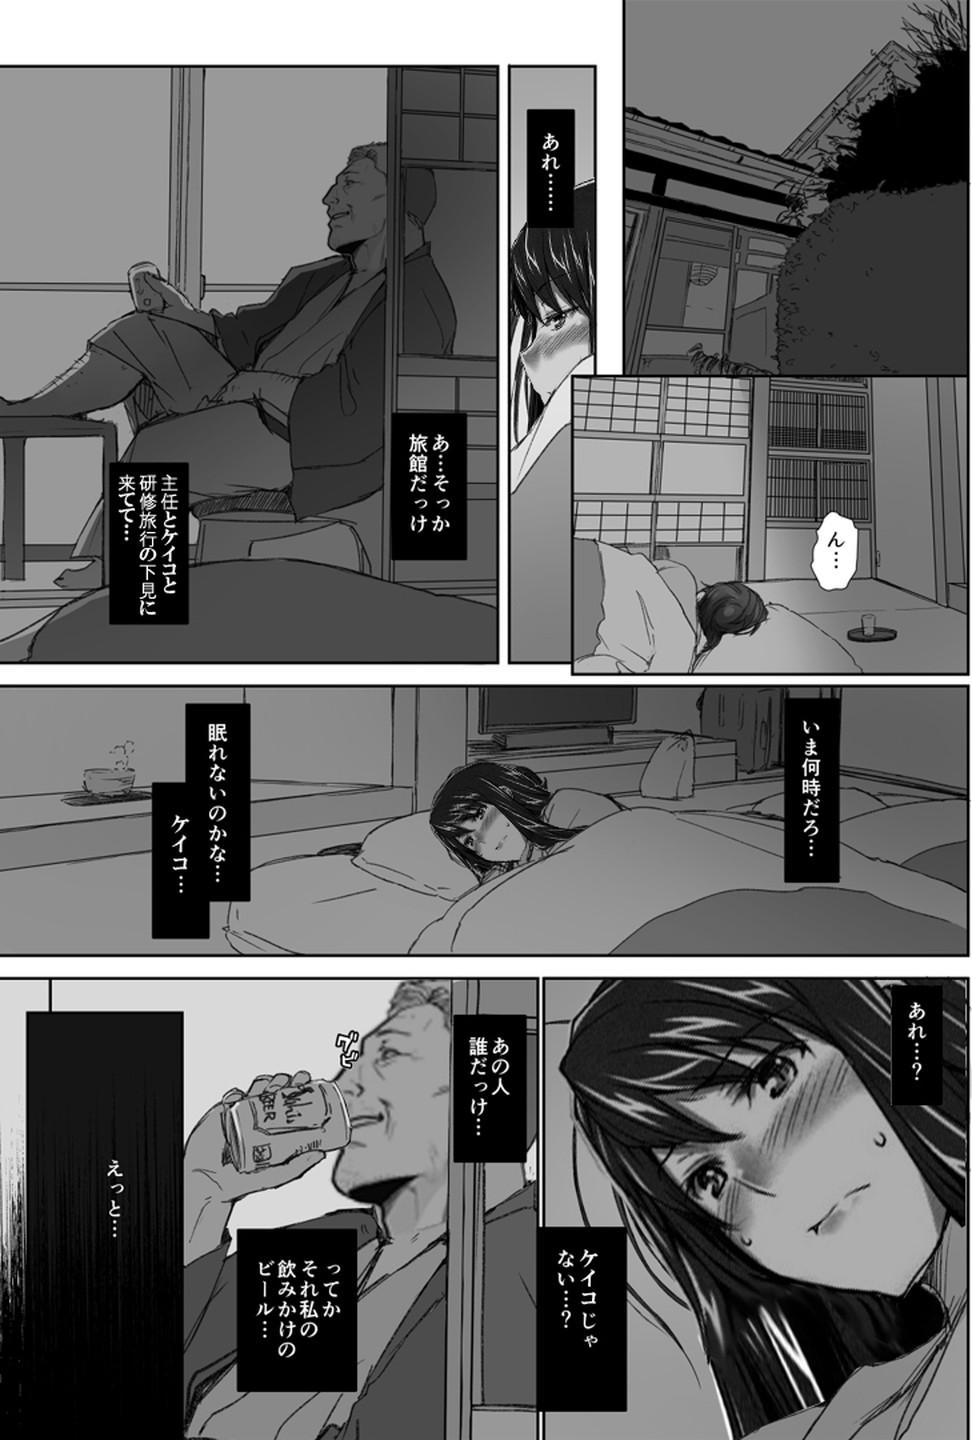 Sakiko-san in delusion Vol.1 Ver.1.1 ~Sakiko-san's circumstance at an educational training~ Stupid Sakiko (collage) on-going 128